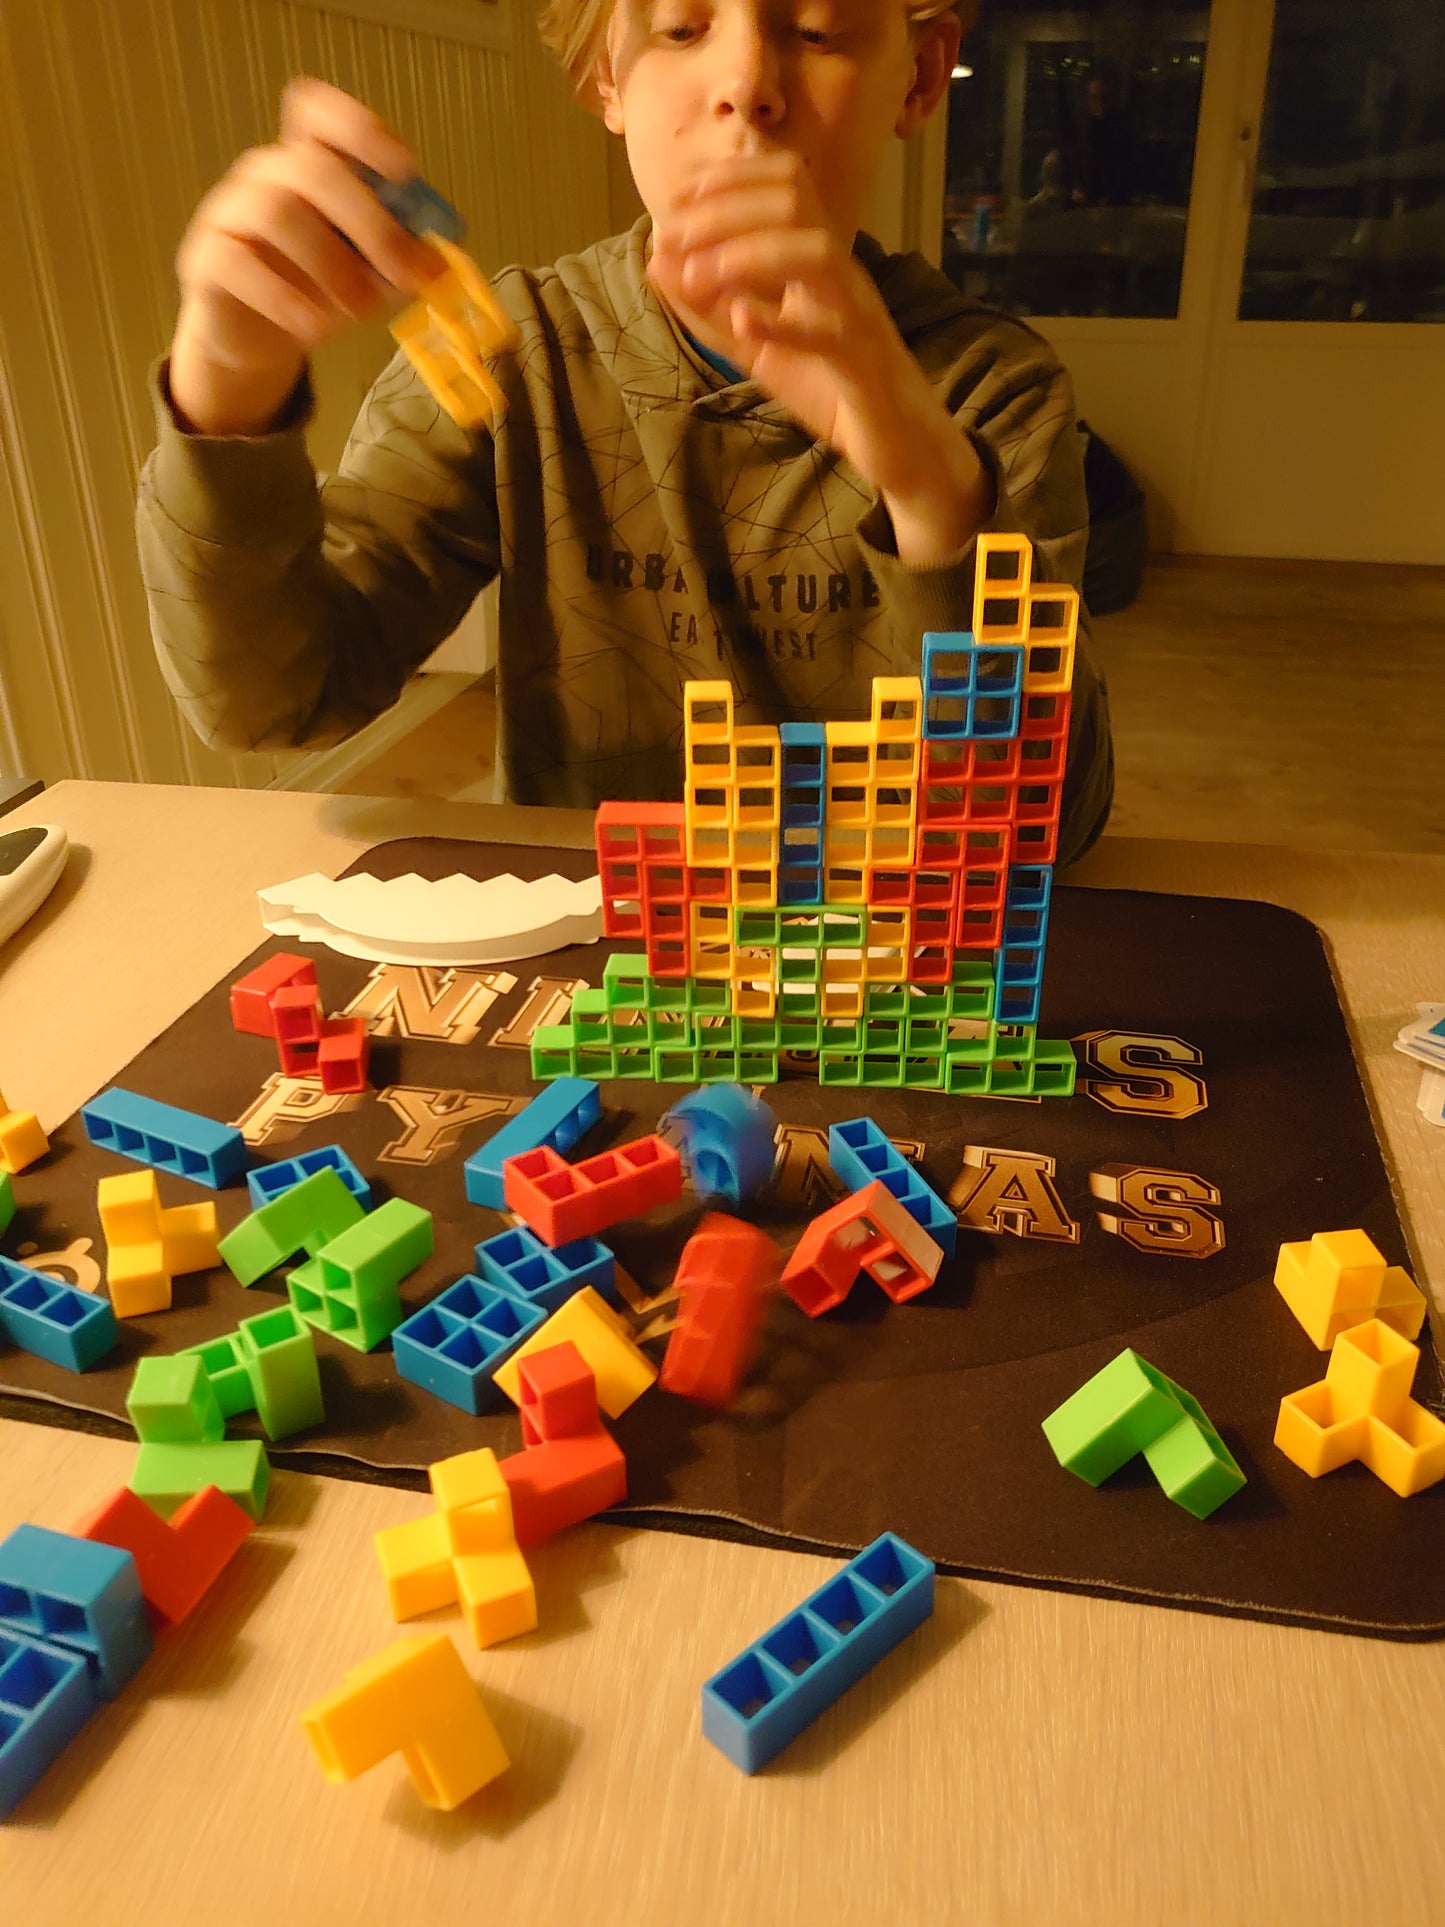 64 delers Tetris-lignende stablespill - den som velter tårnet har tapt